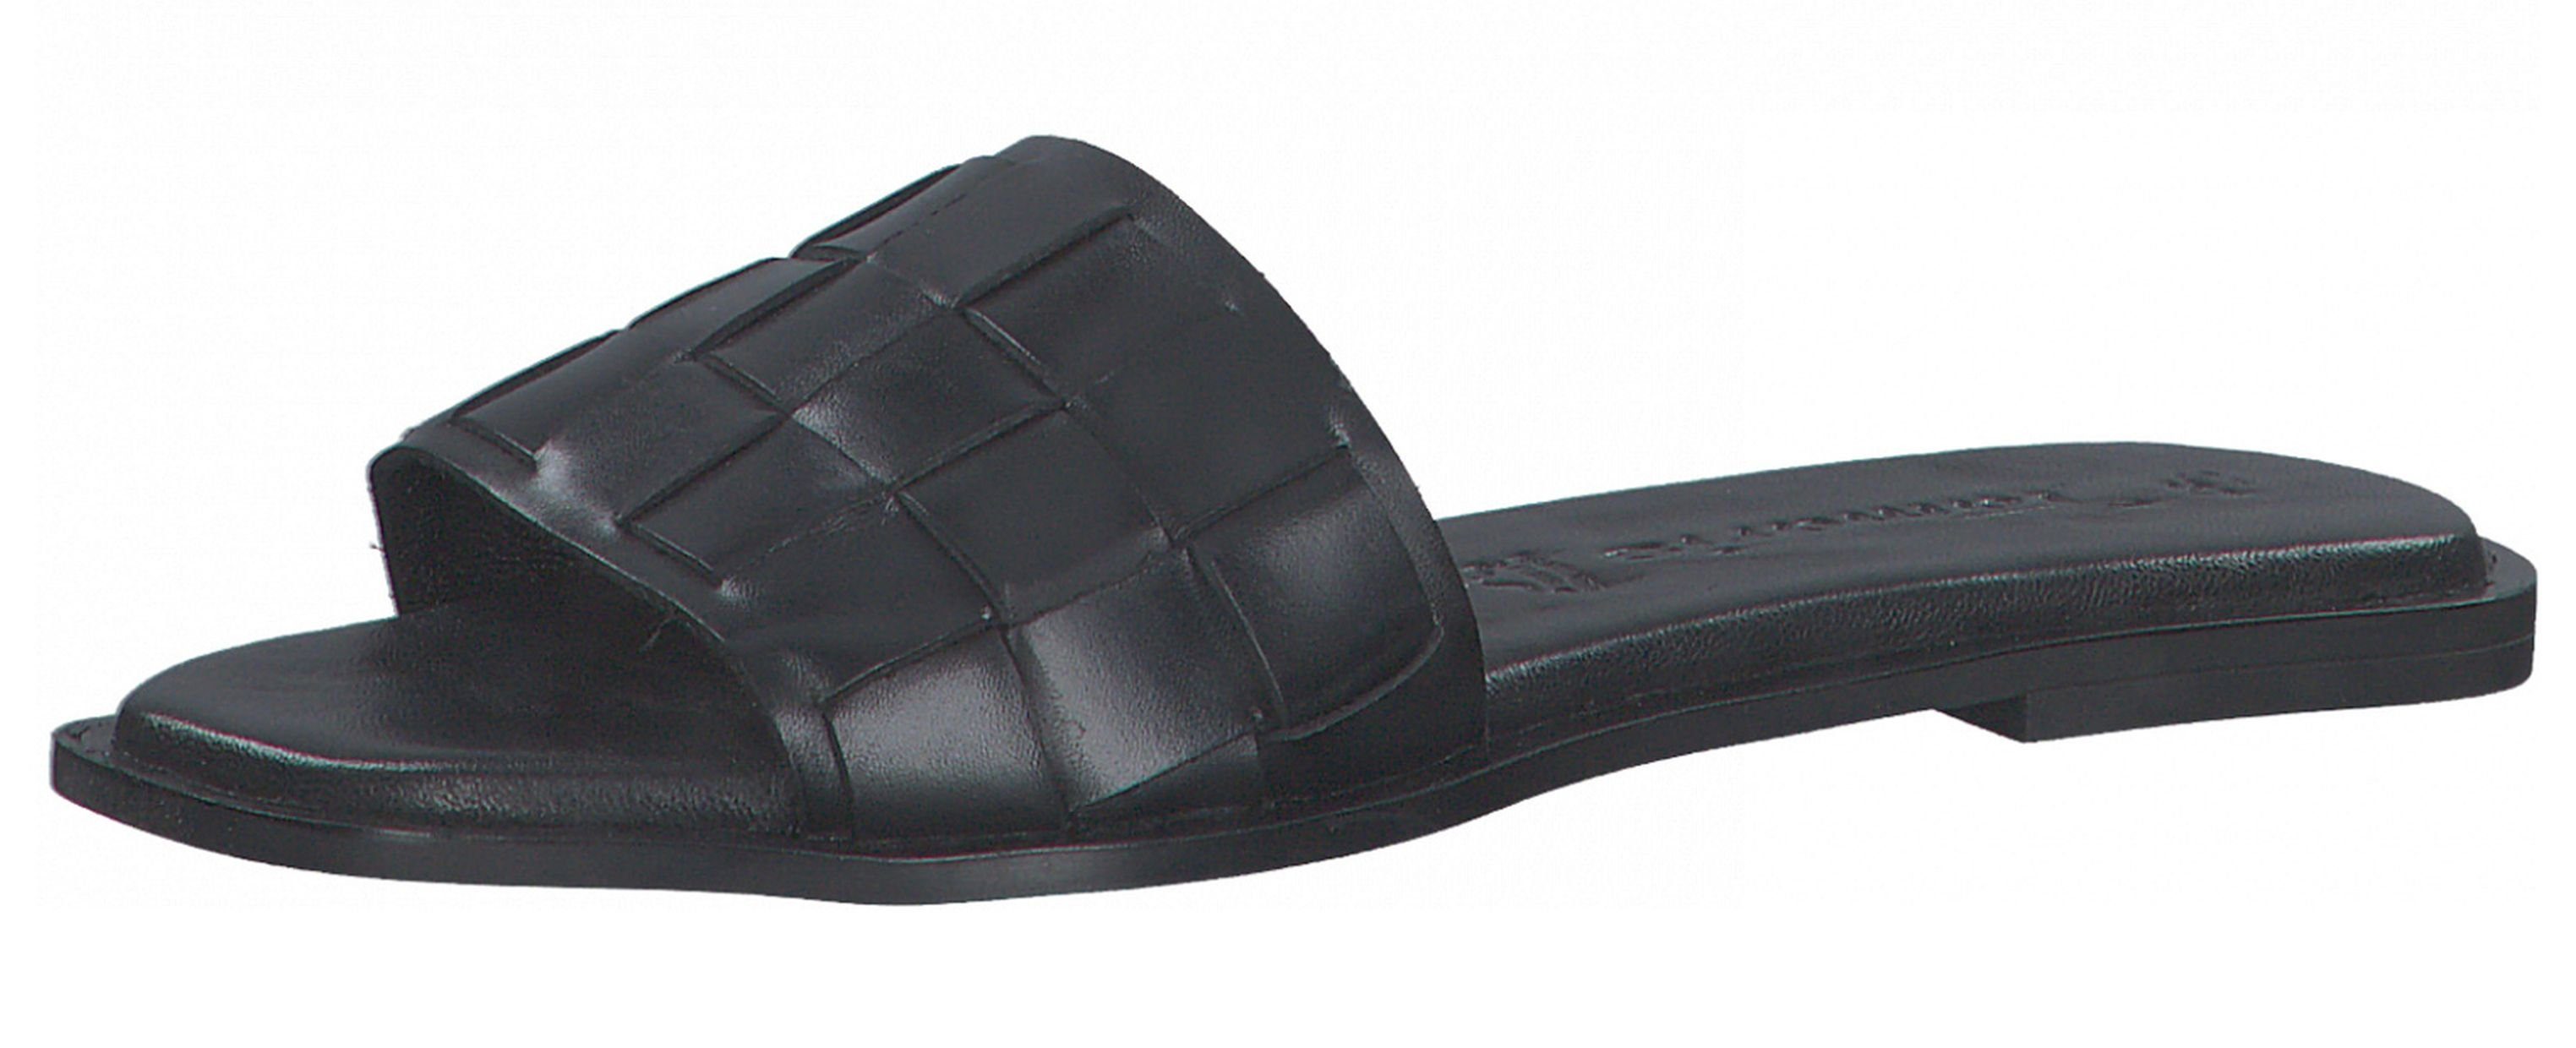 Super günstiger Kauf Tamaris 1-27122-28 Leather Black Sandale 003